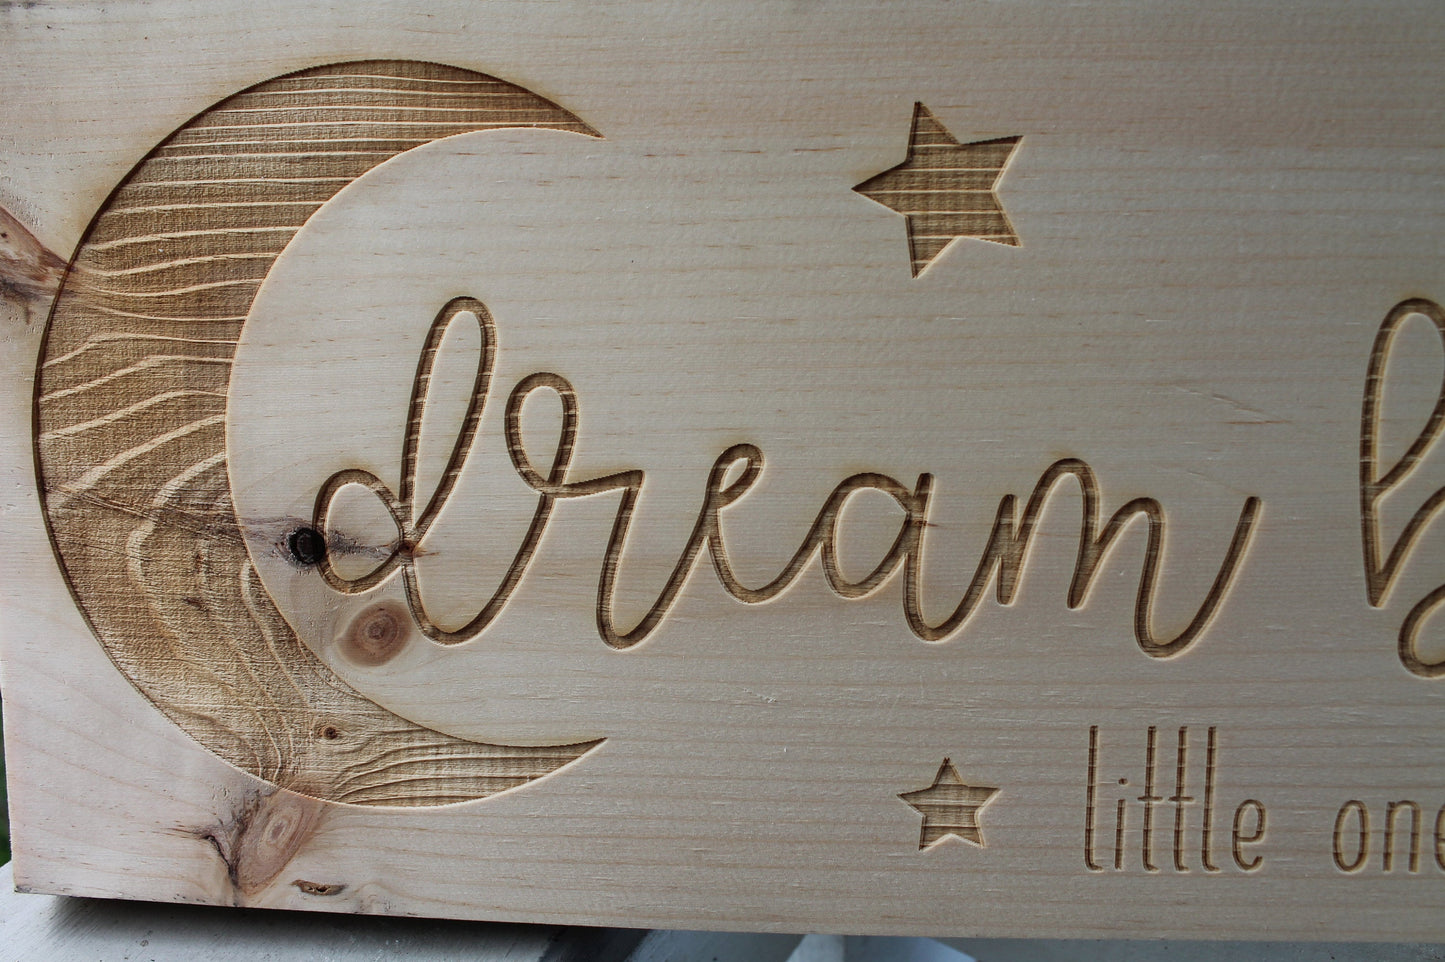 Dream Big Little One, Nursery, Art, Moon and Stars, Wall Hanging,Rustic, Barn wood, Laser Engraved, Sign, FootstepsinthePast